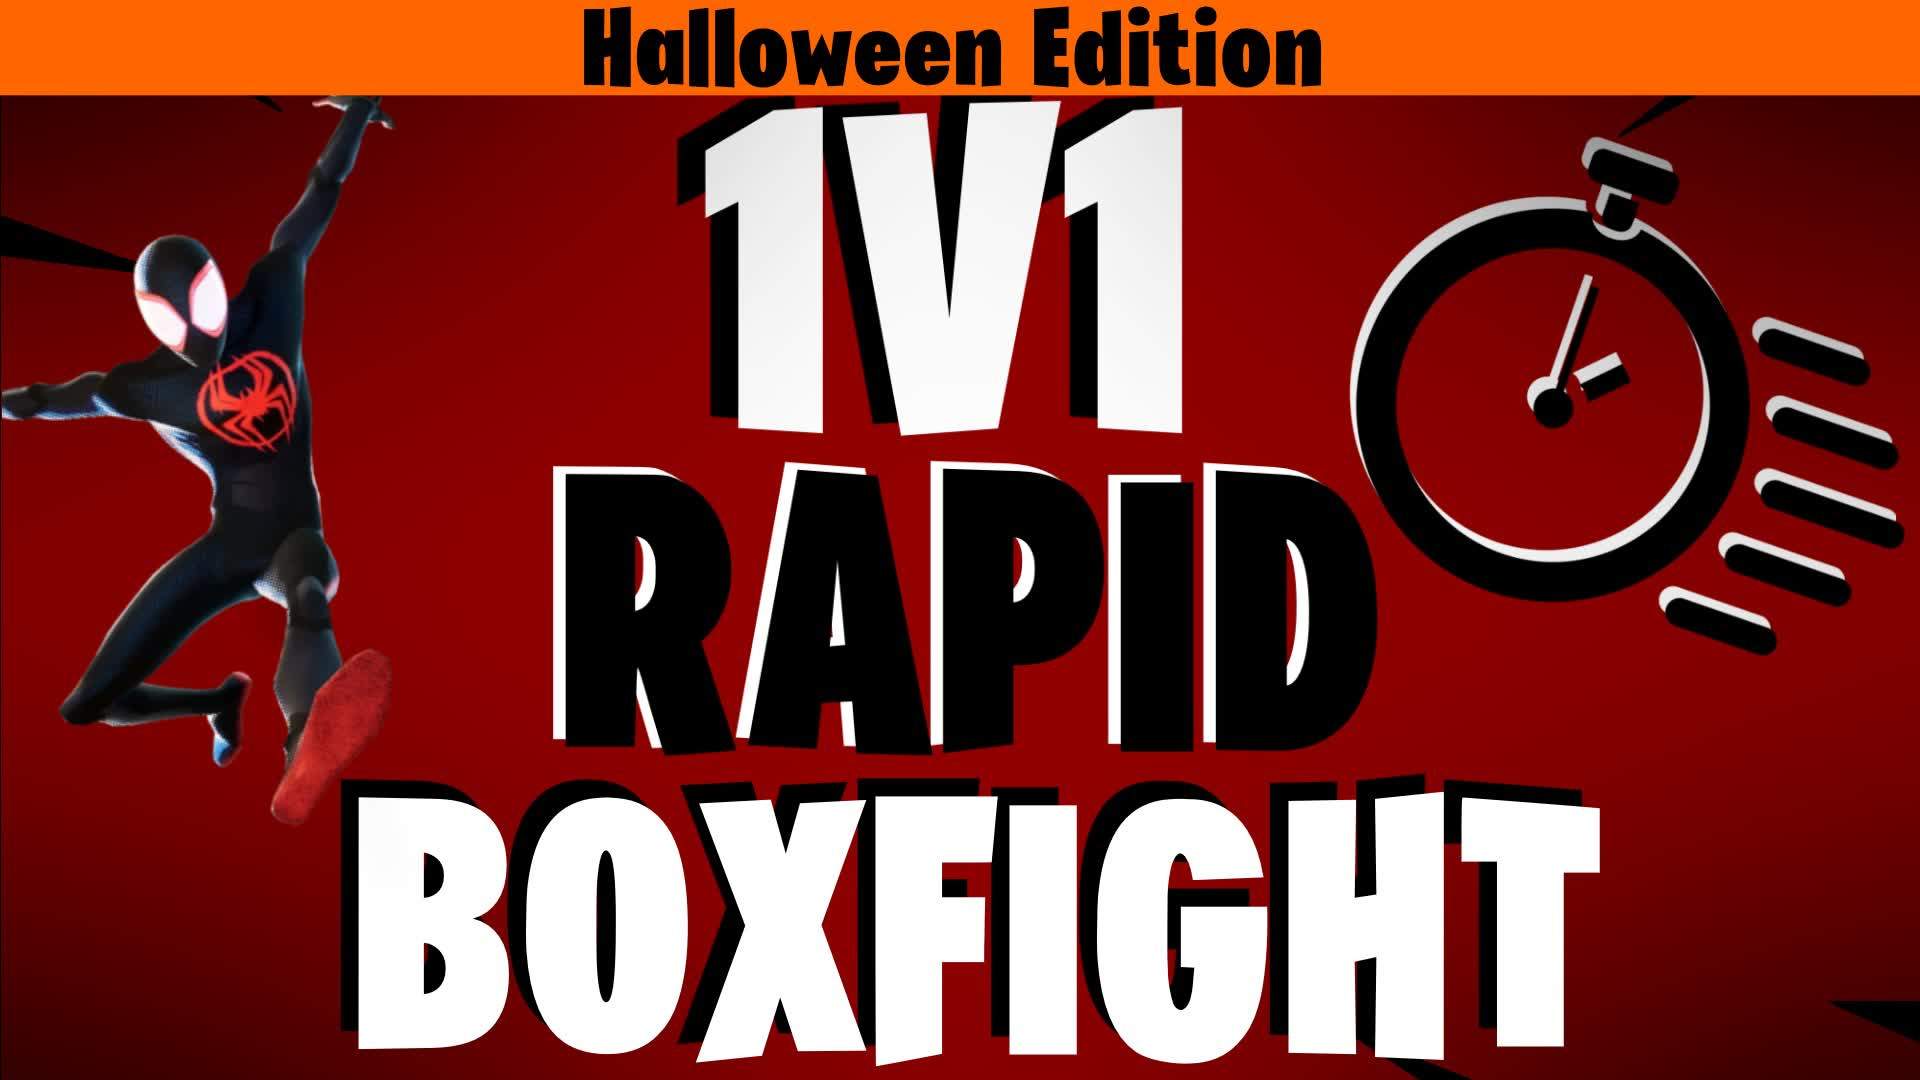 1v1 Rapid Boxfights